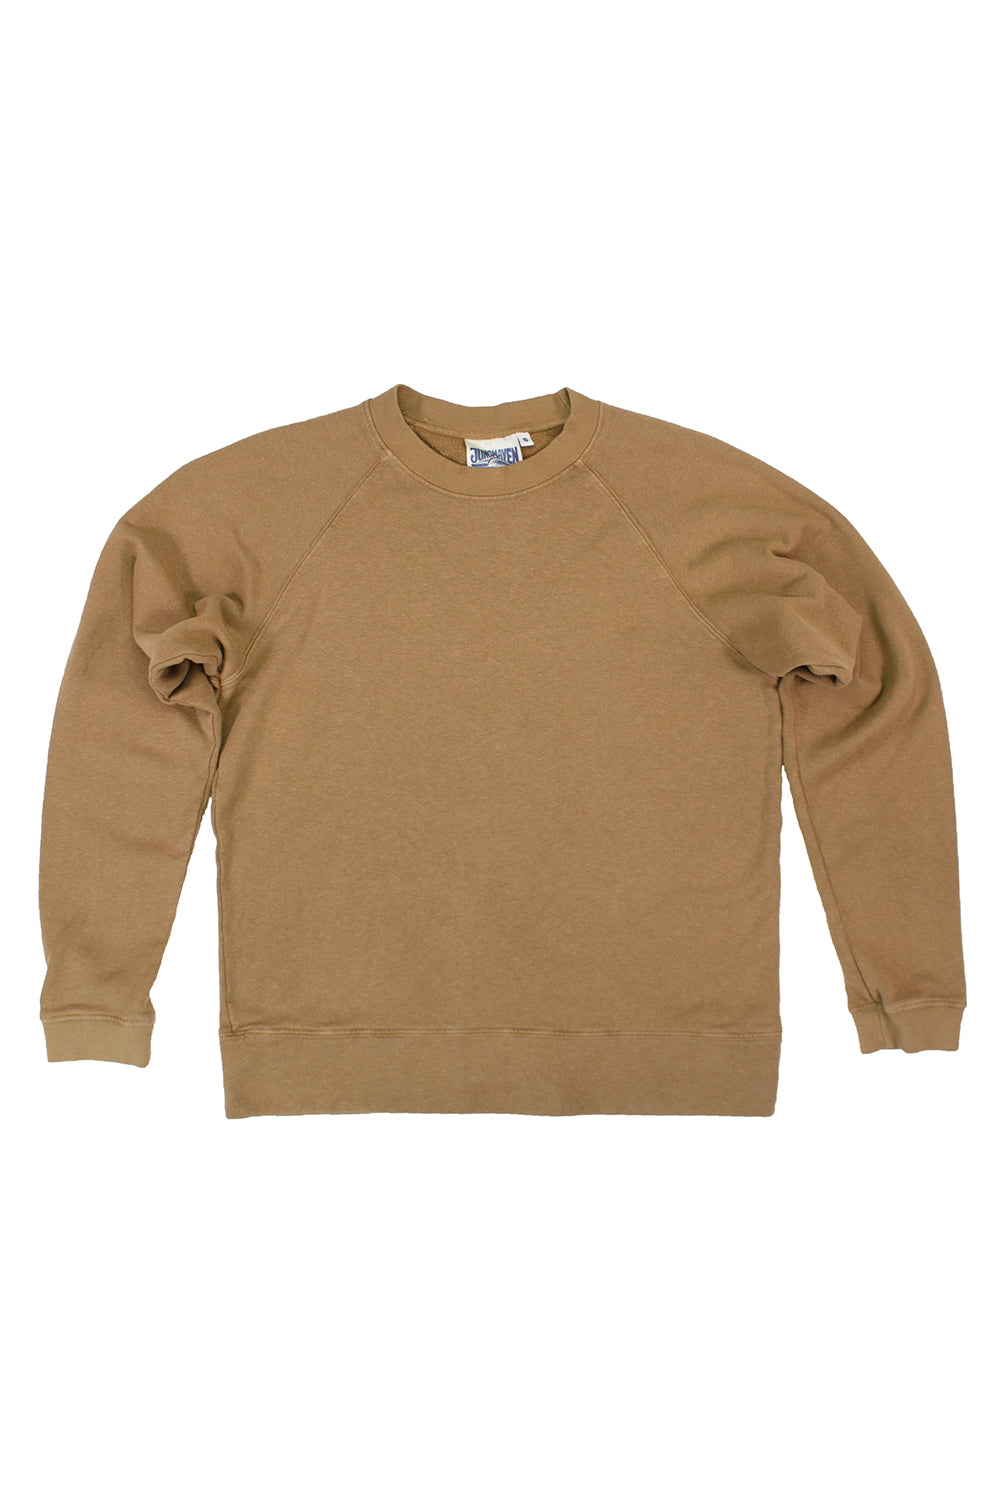 Sierra Raglan Sweatshirt | Jungmaven Hemp Clothing & Accessories / Color: Coyote